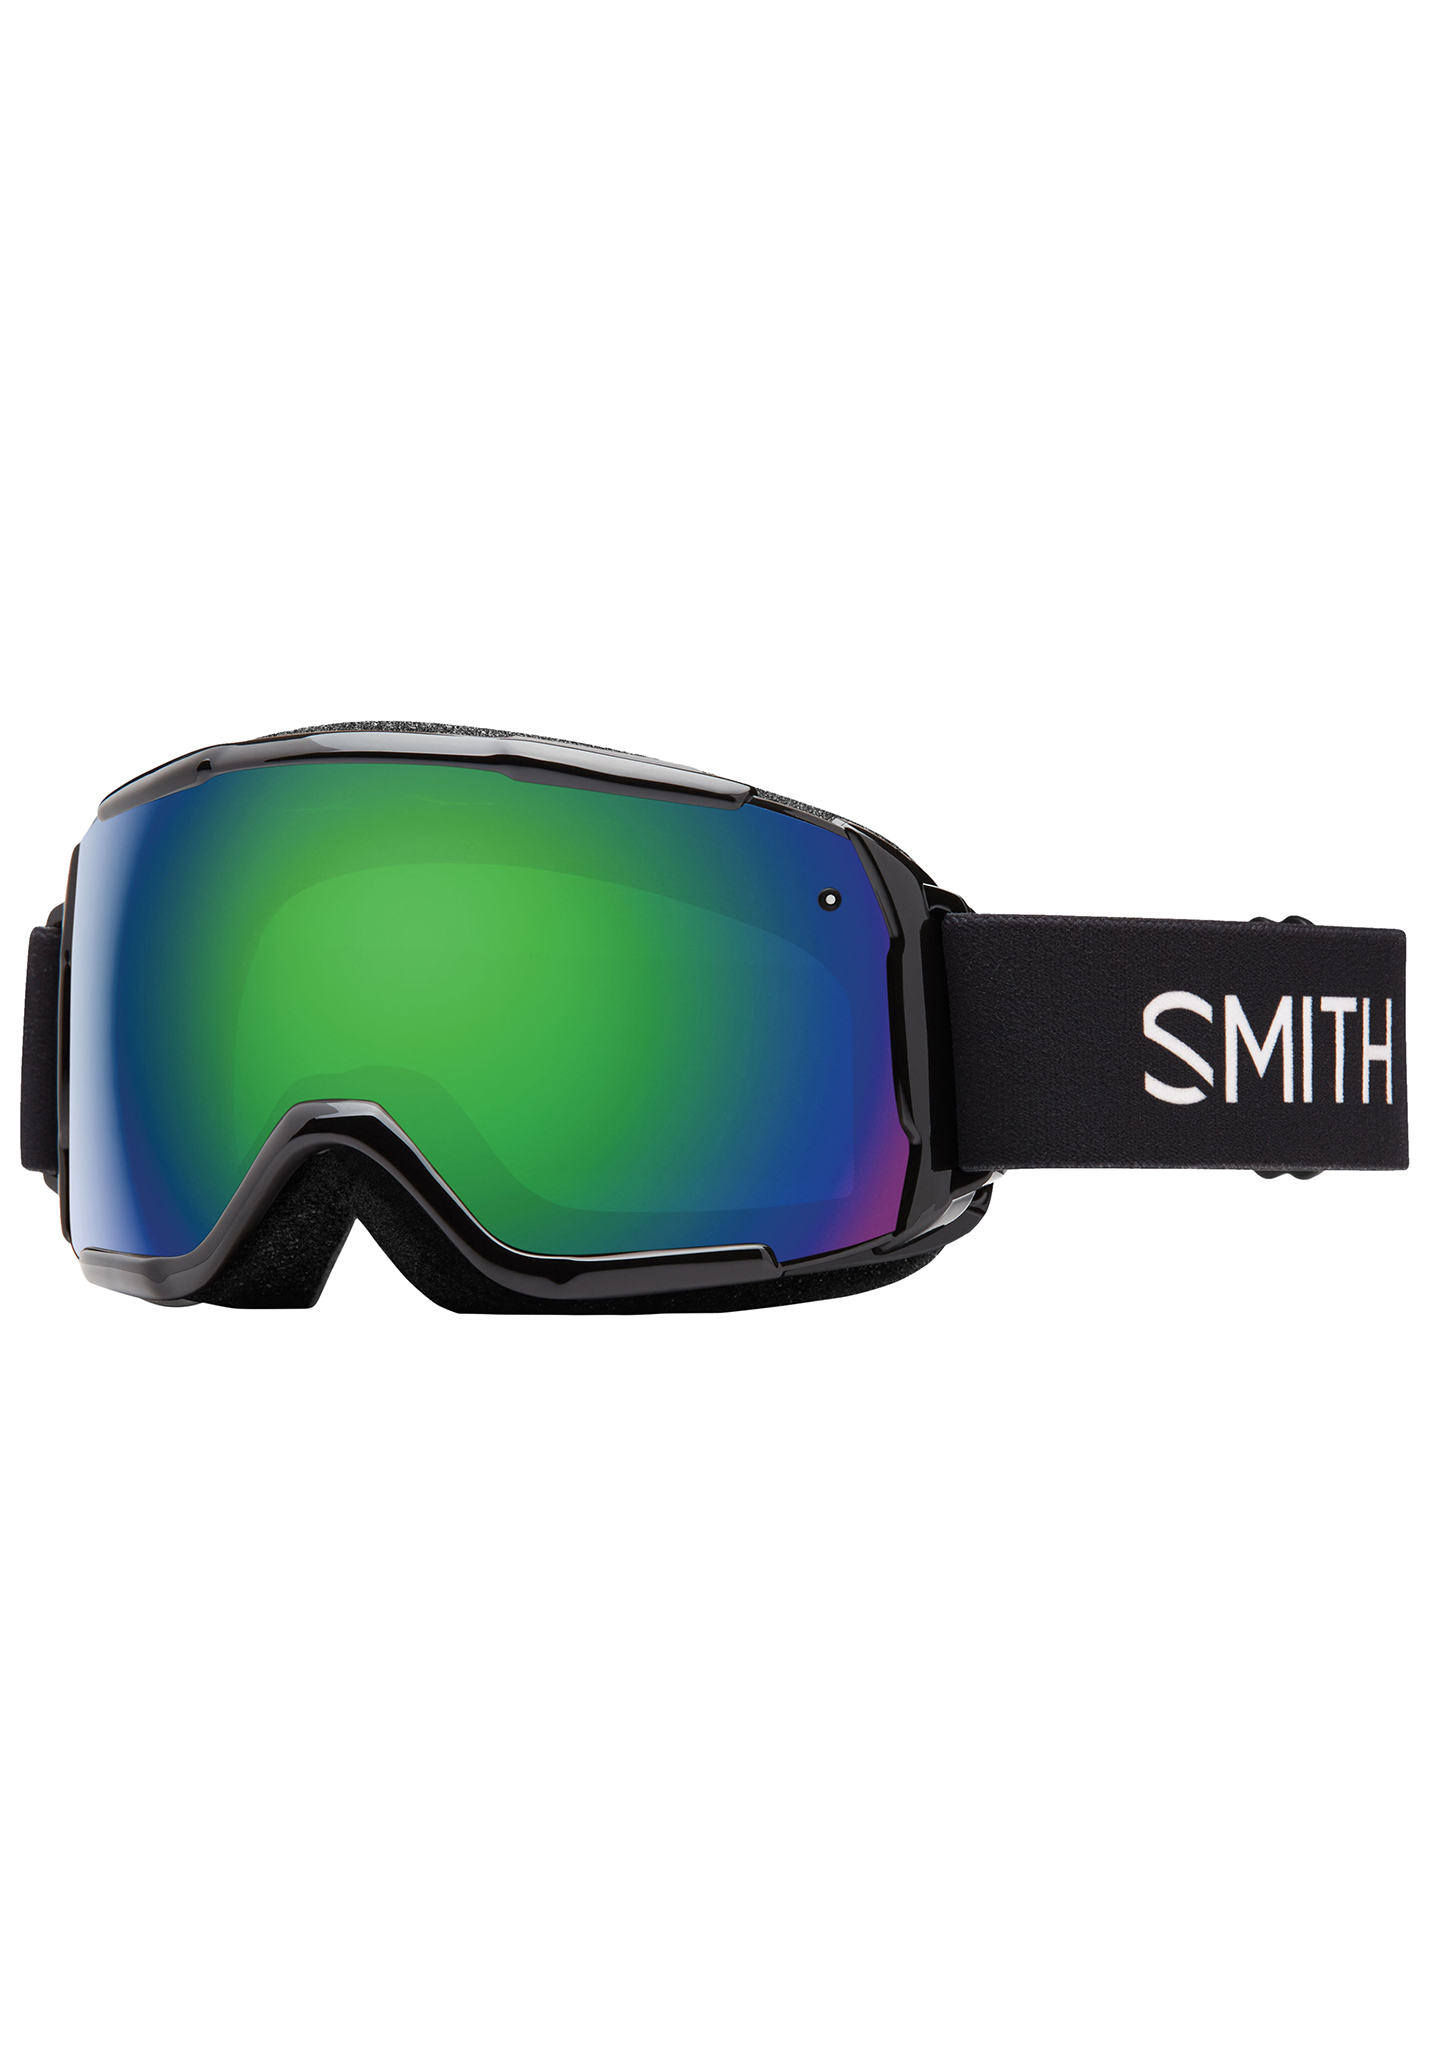 Smith Grom Snowboardbrillen schwarz / grün sol-x spiegel One Size